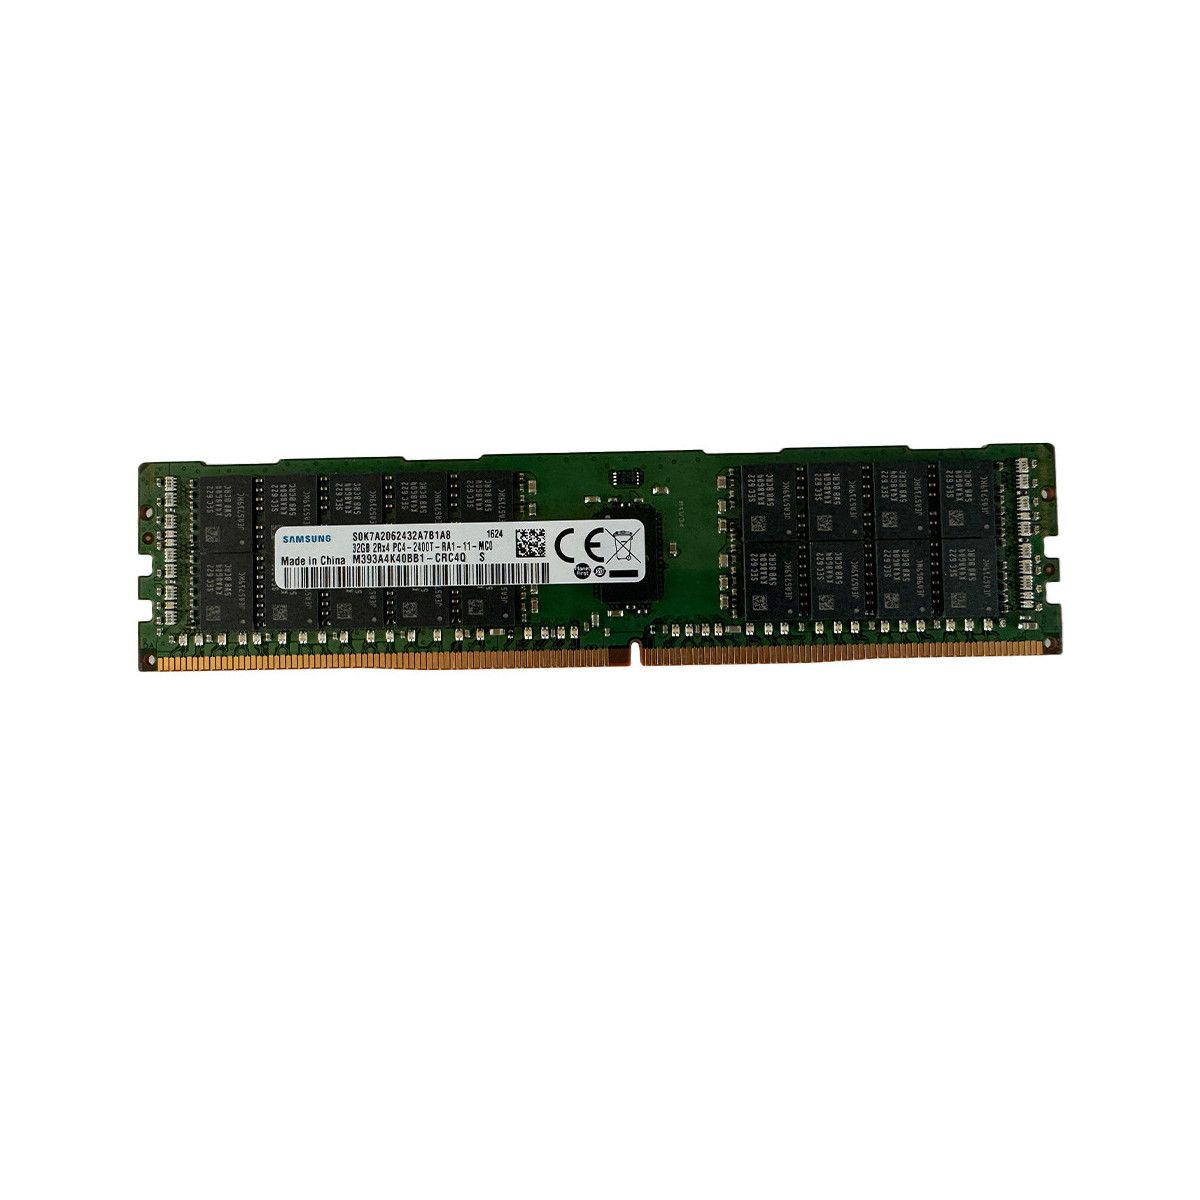 A8868768-MS - Memstar 1x 32GB DDR4-2400 RDIMM PC4-19200T-R - Mem-Star Compatible OEM Memoria 1 - Memstar 